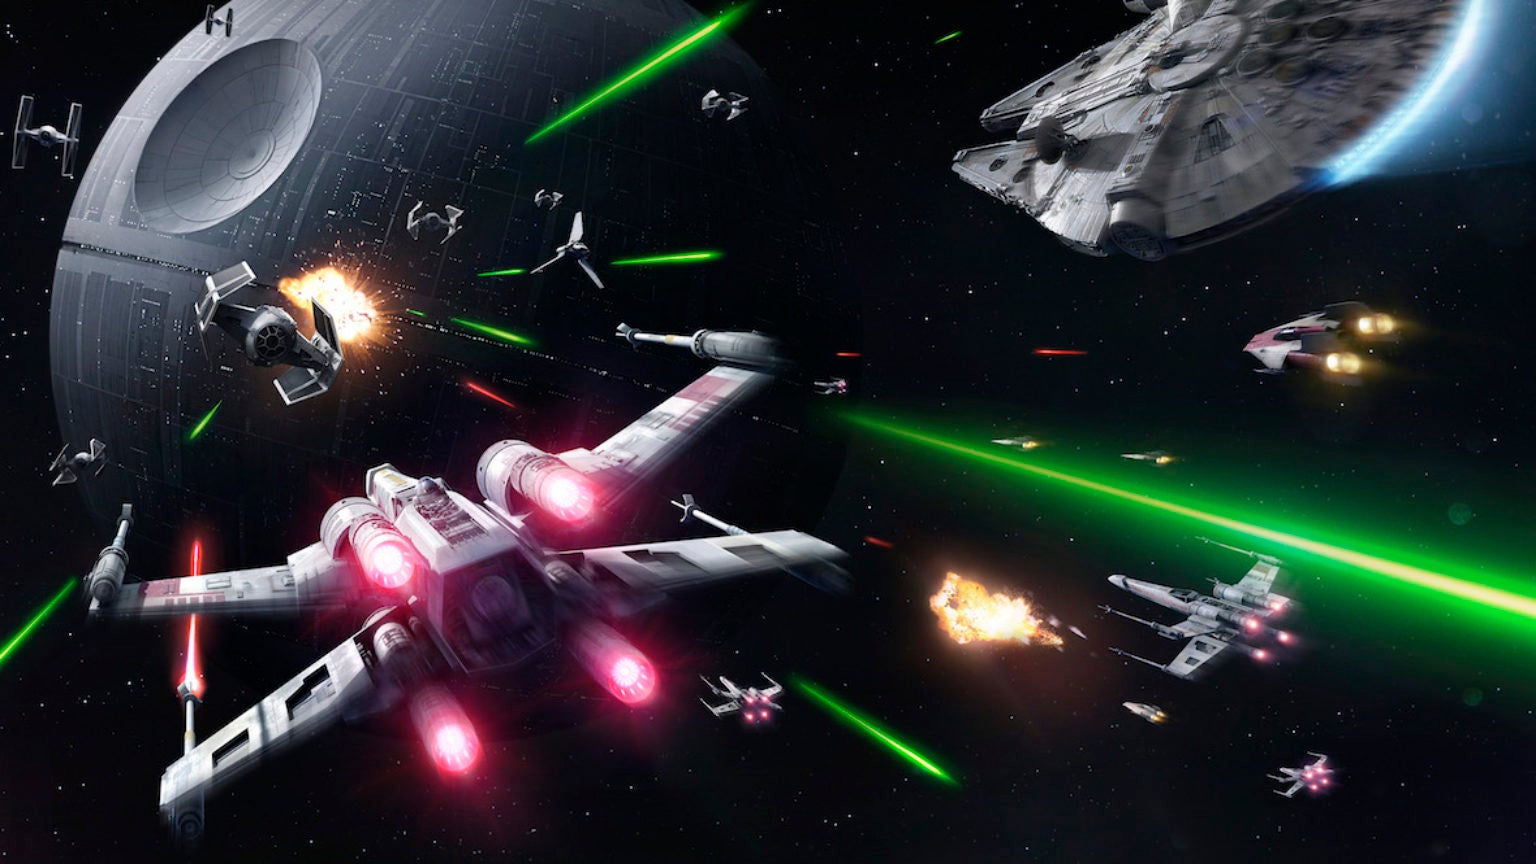 Image for Disney teases new Star Wars video game reveal for December 14